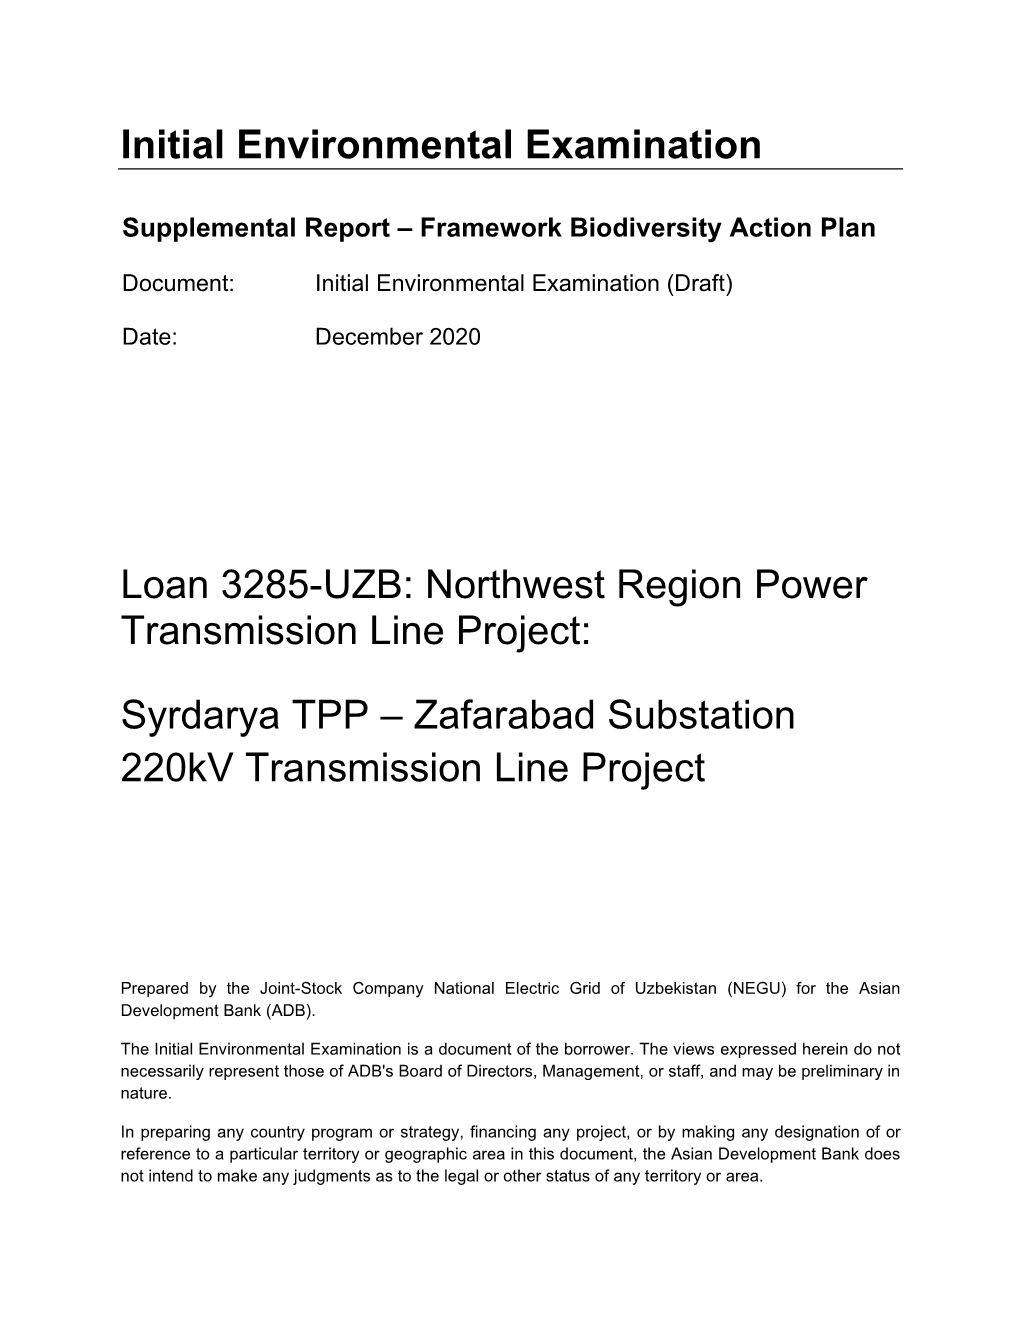 47296-001: Northwest Region Power Transmission Line Project